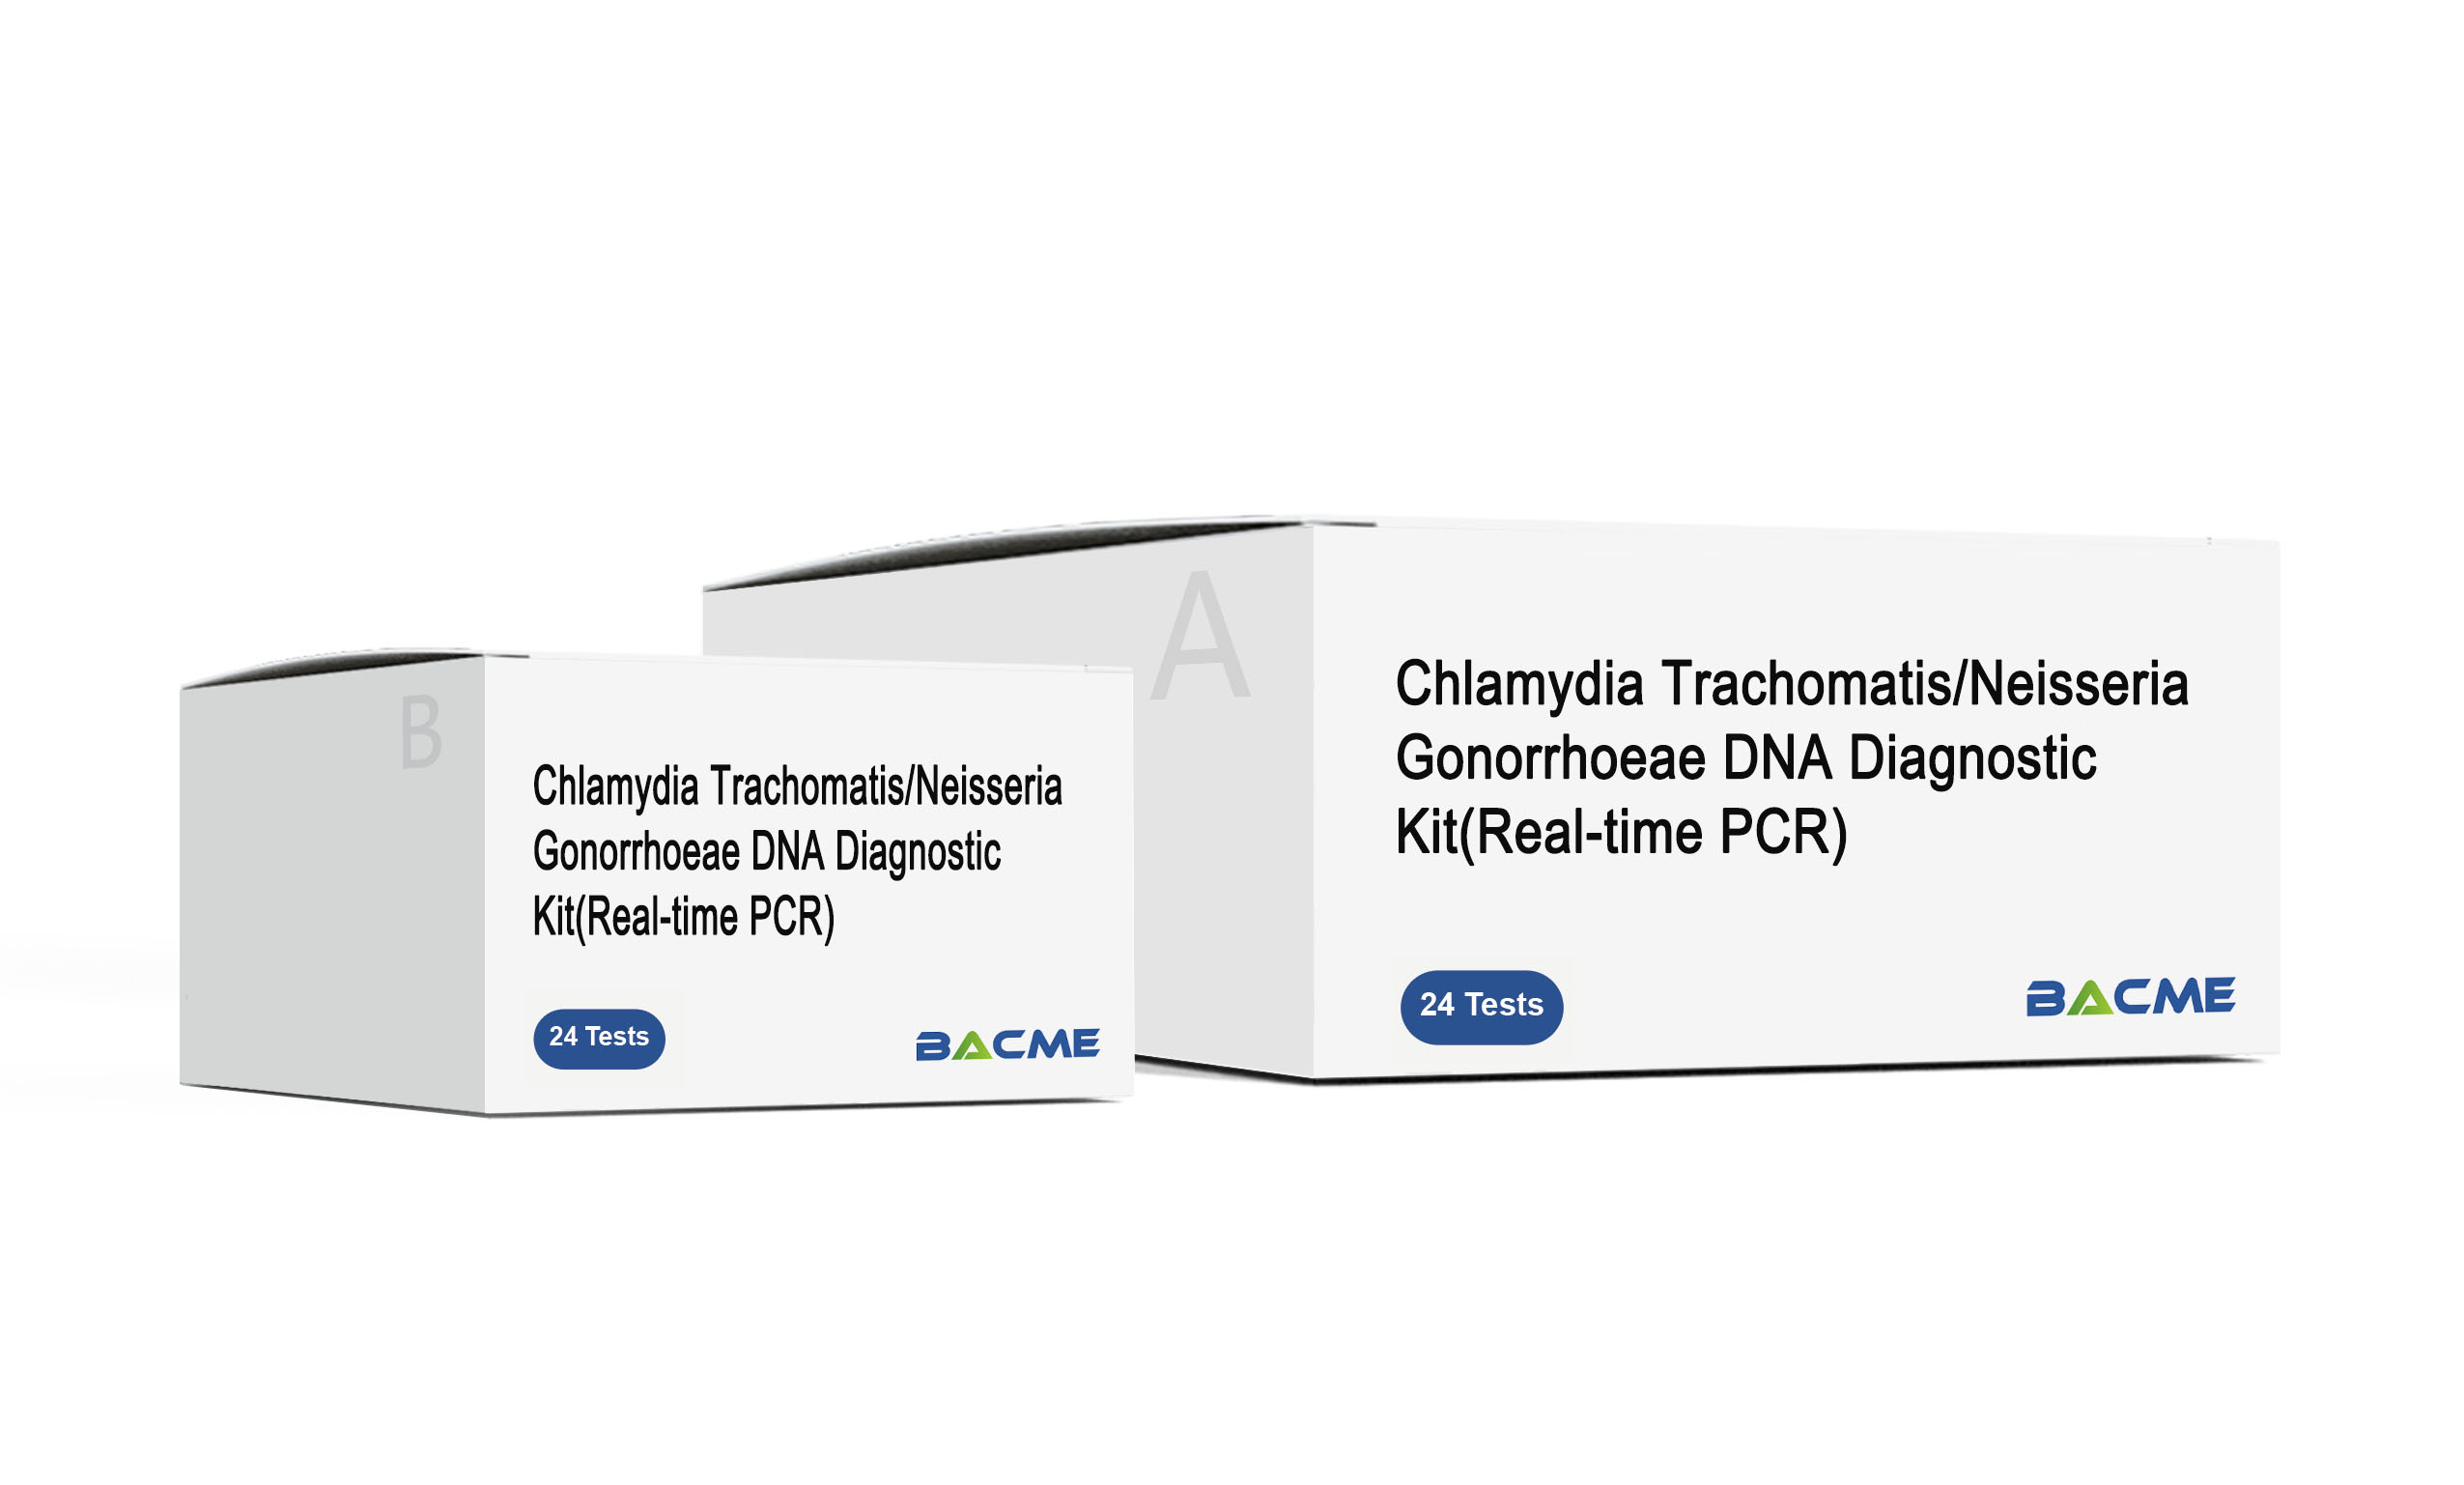 Chlamydia trachomatis/Neisseria gonorrhoeae